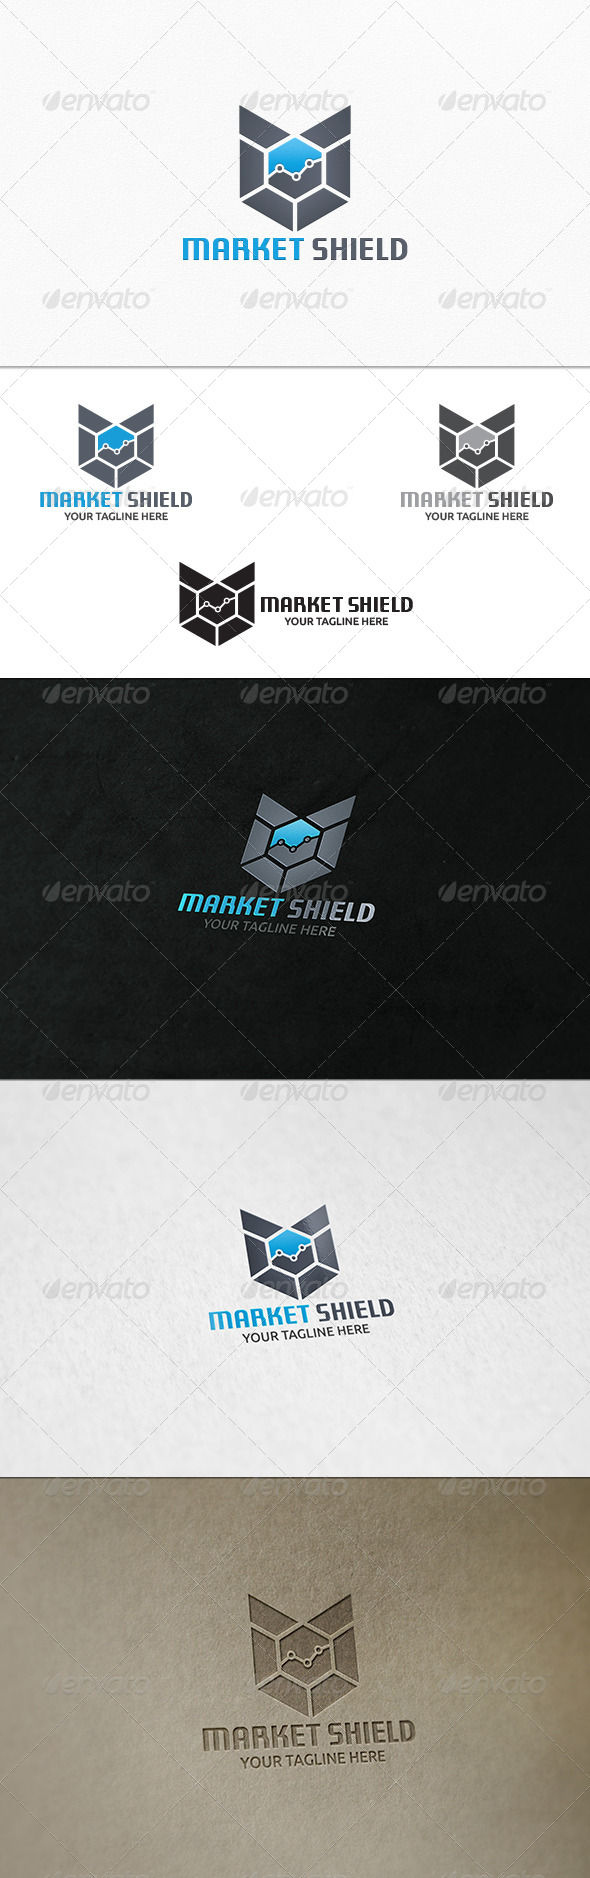 Market Shield - Logo Template